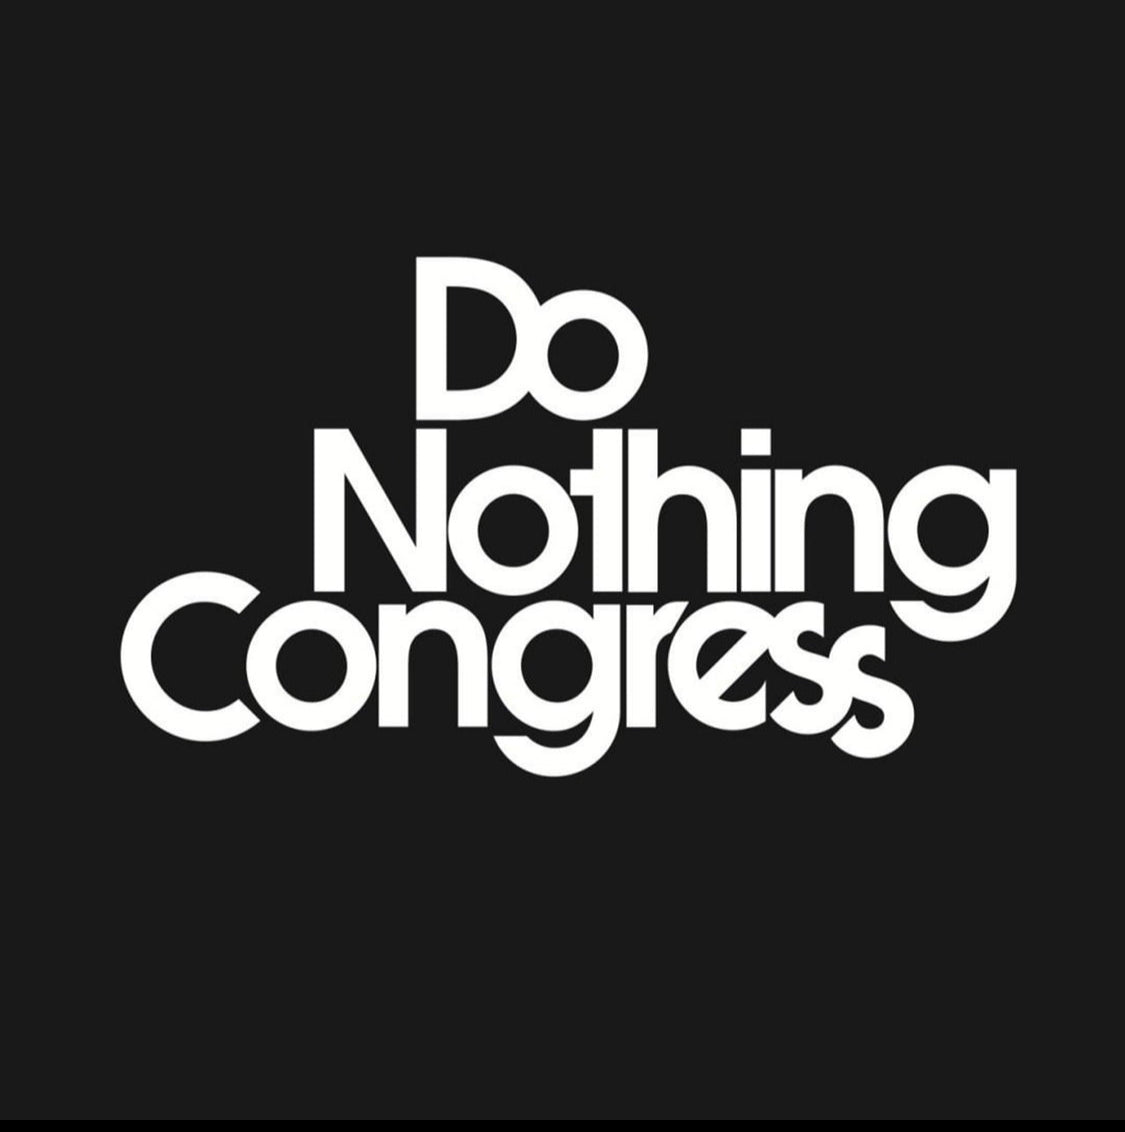 Do Nothing Congress  Nothing but (sacai)